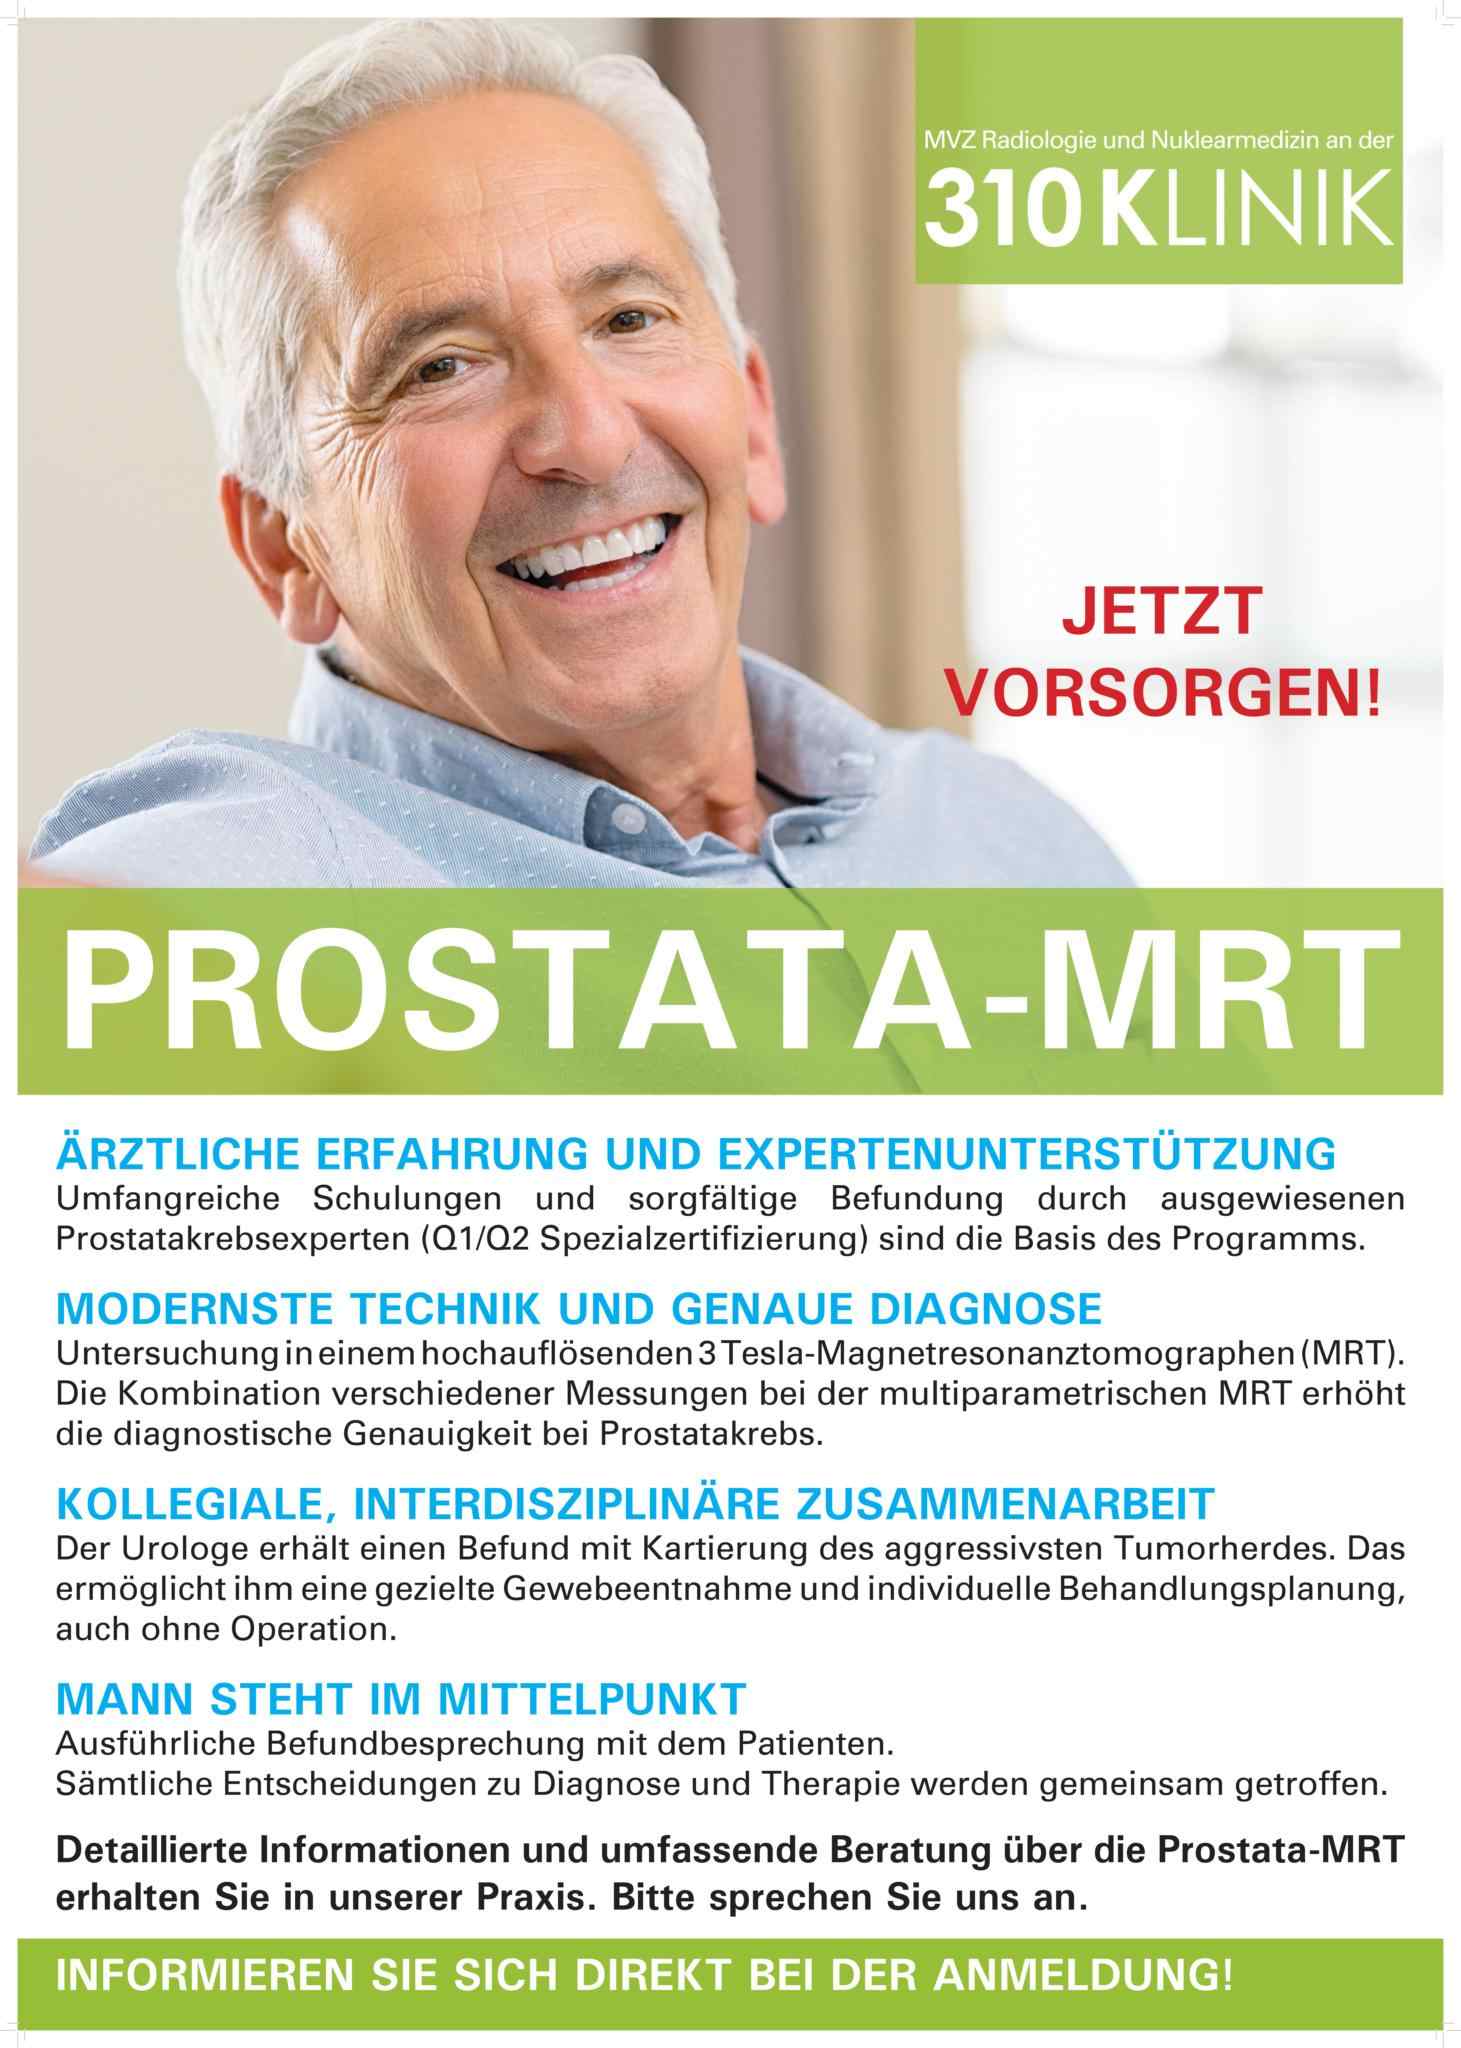 mrt prostata genauigkeit)